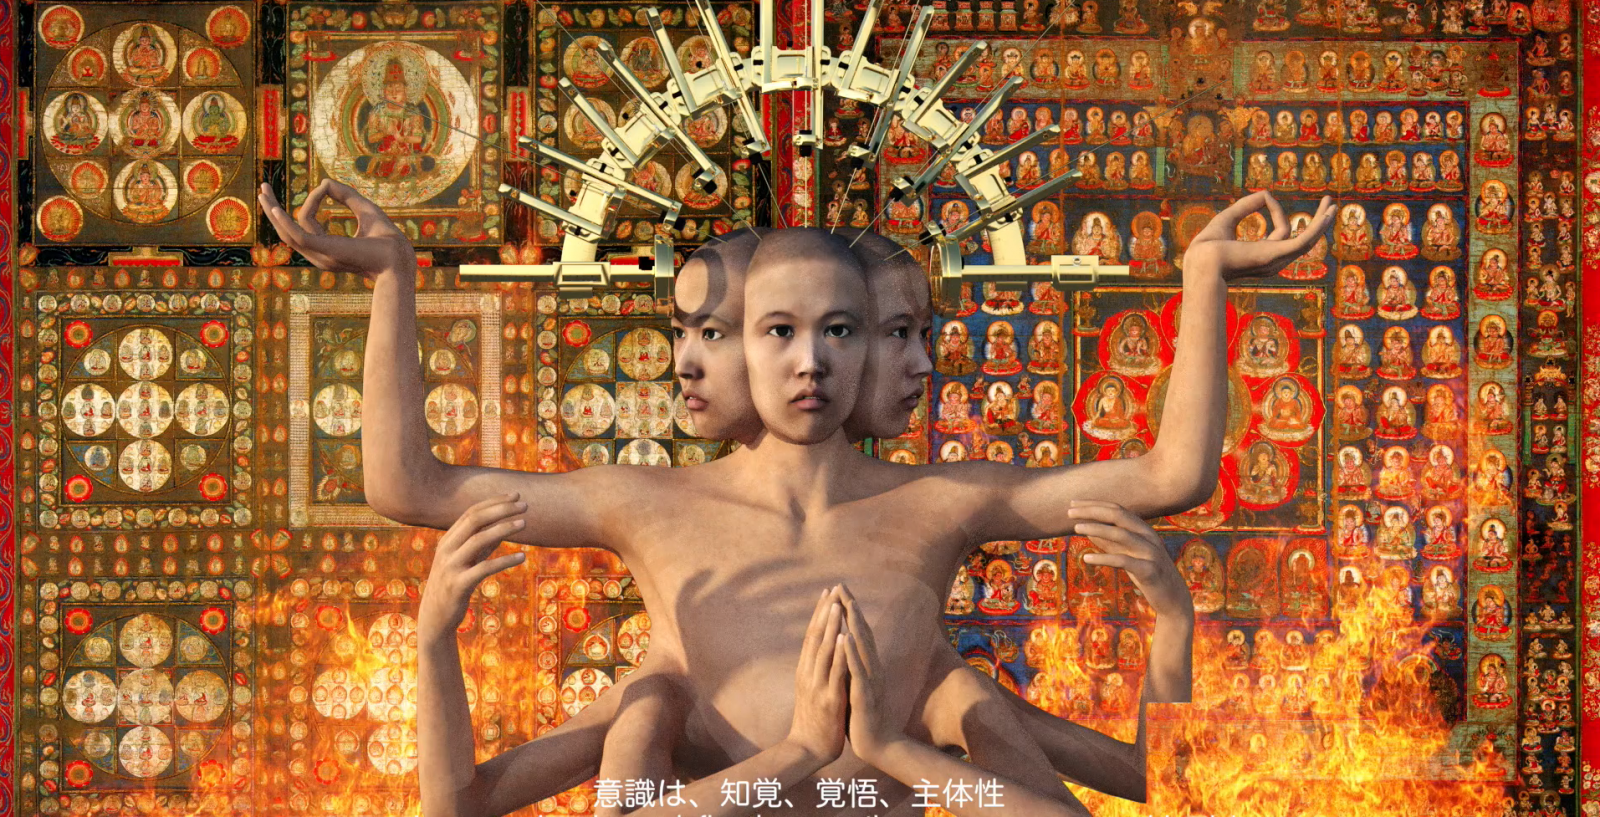 L’oeuvre de la semaine : "Delusional Mandala" de Lu Yang